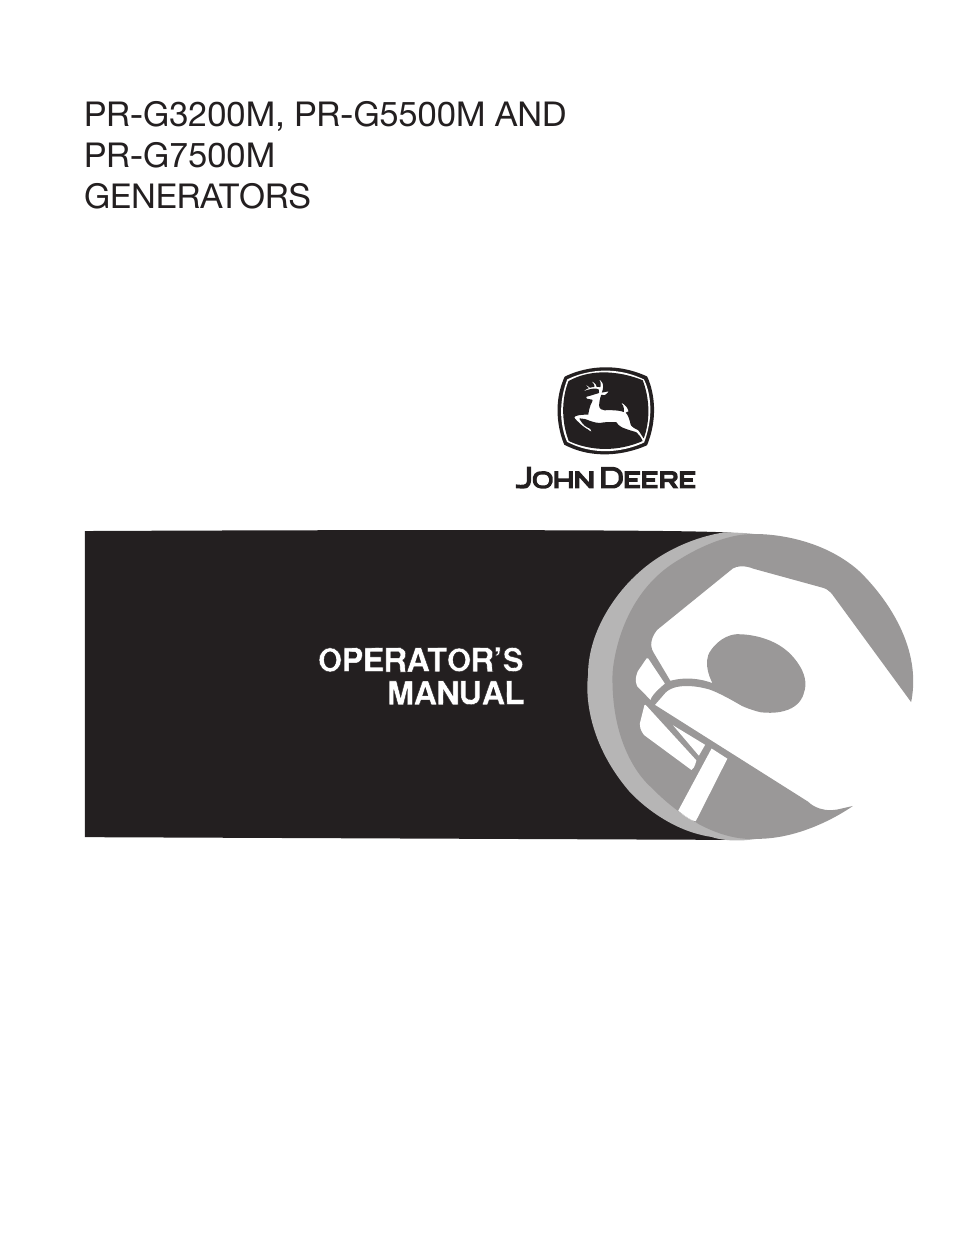 John Deere PR-G7500M User Manual | 92 pages